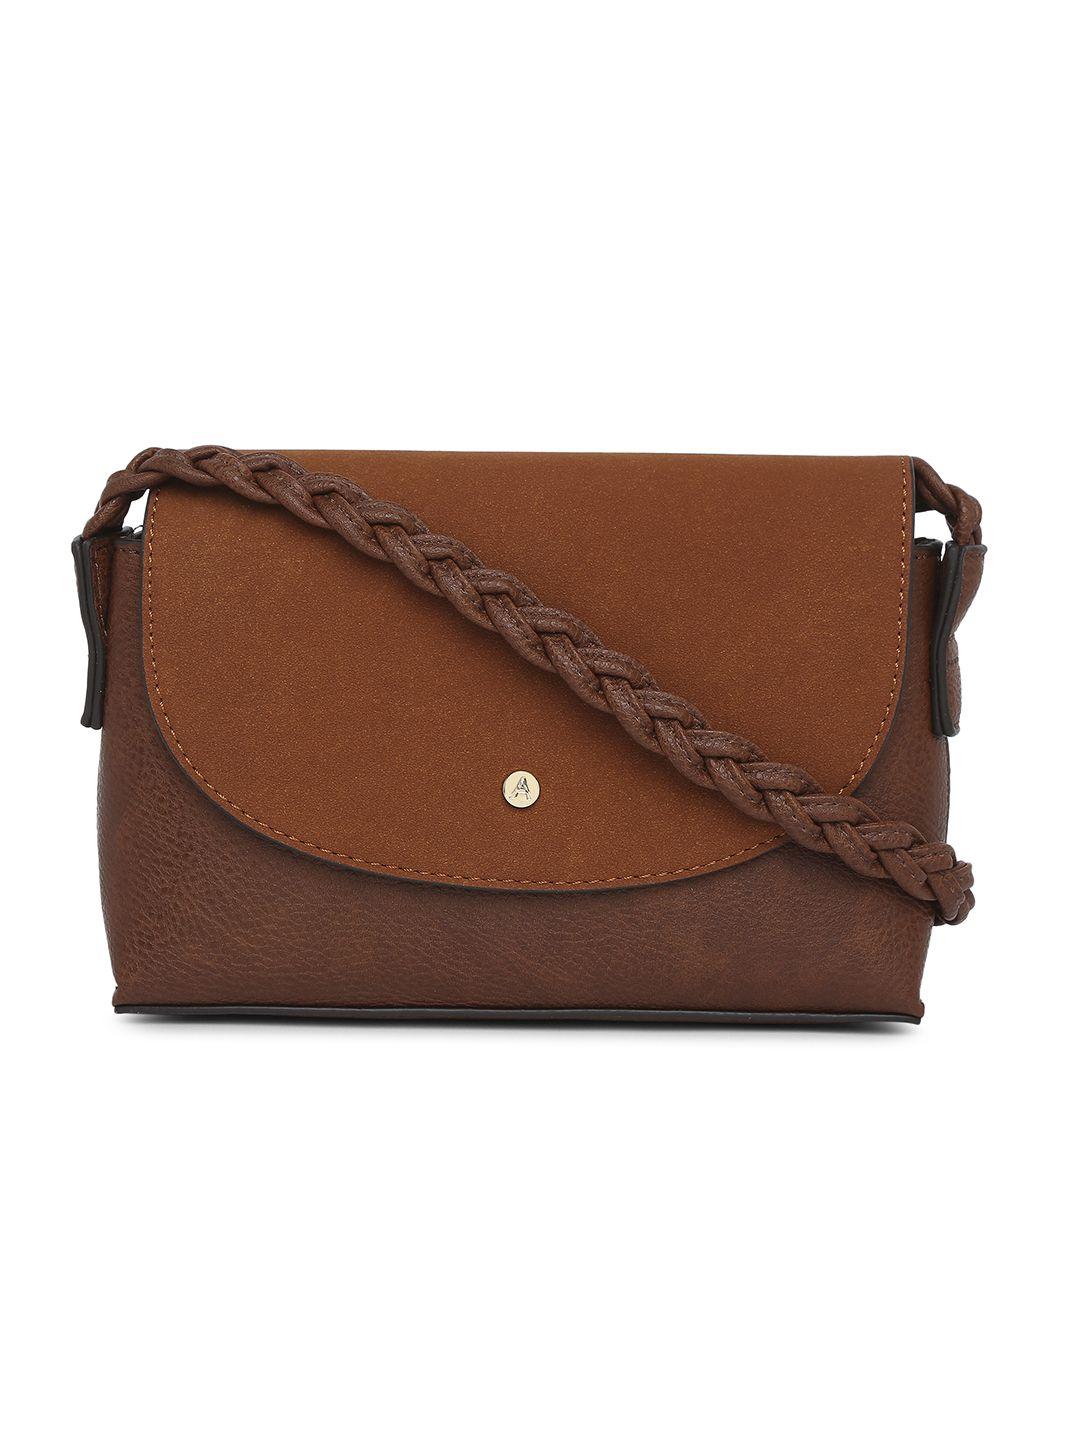 accessorize tan brown solid shopper shoulder bag